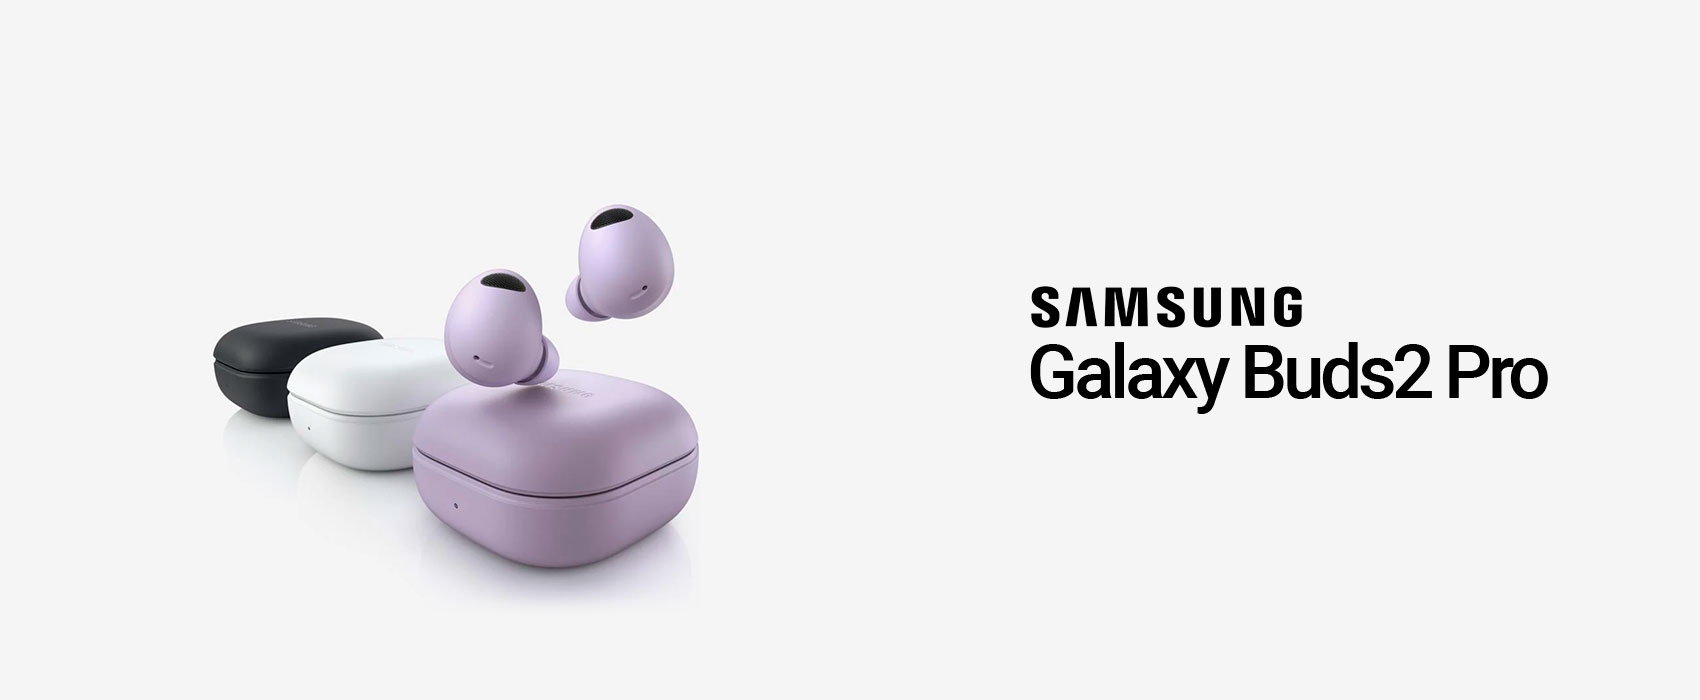 Samsung Galaxy Buds2 Pro - den ultimative in-ear oplevelse?